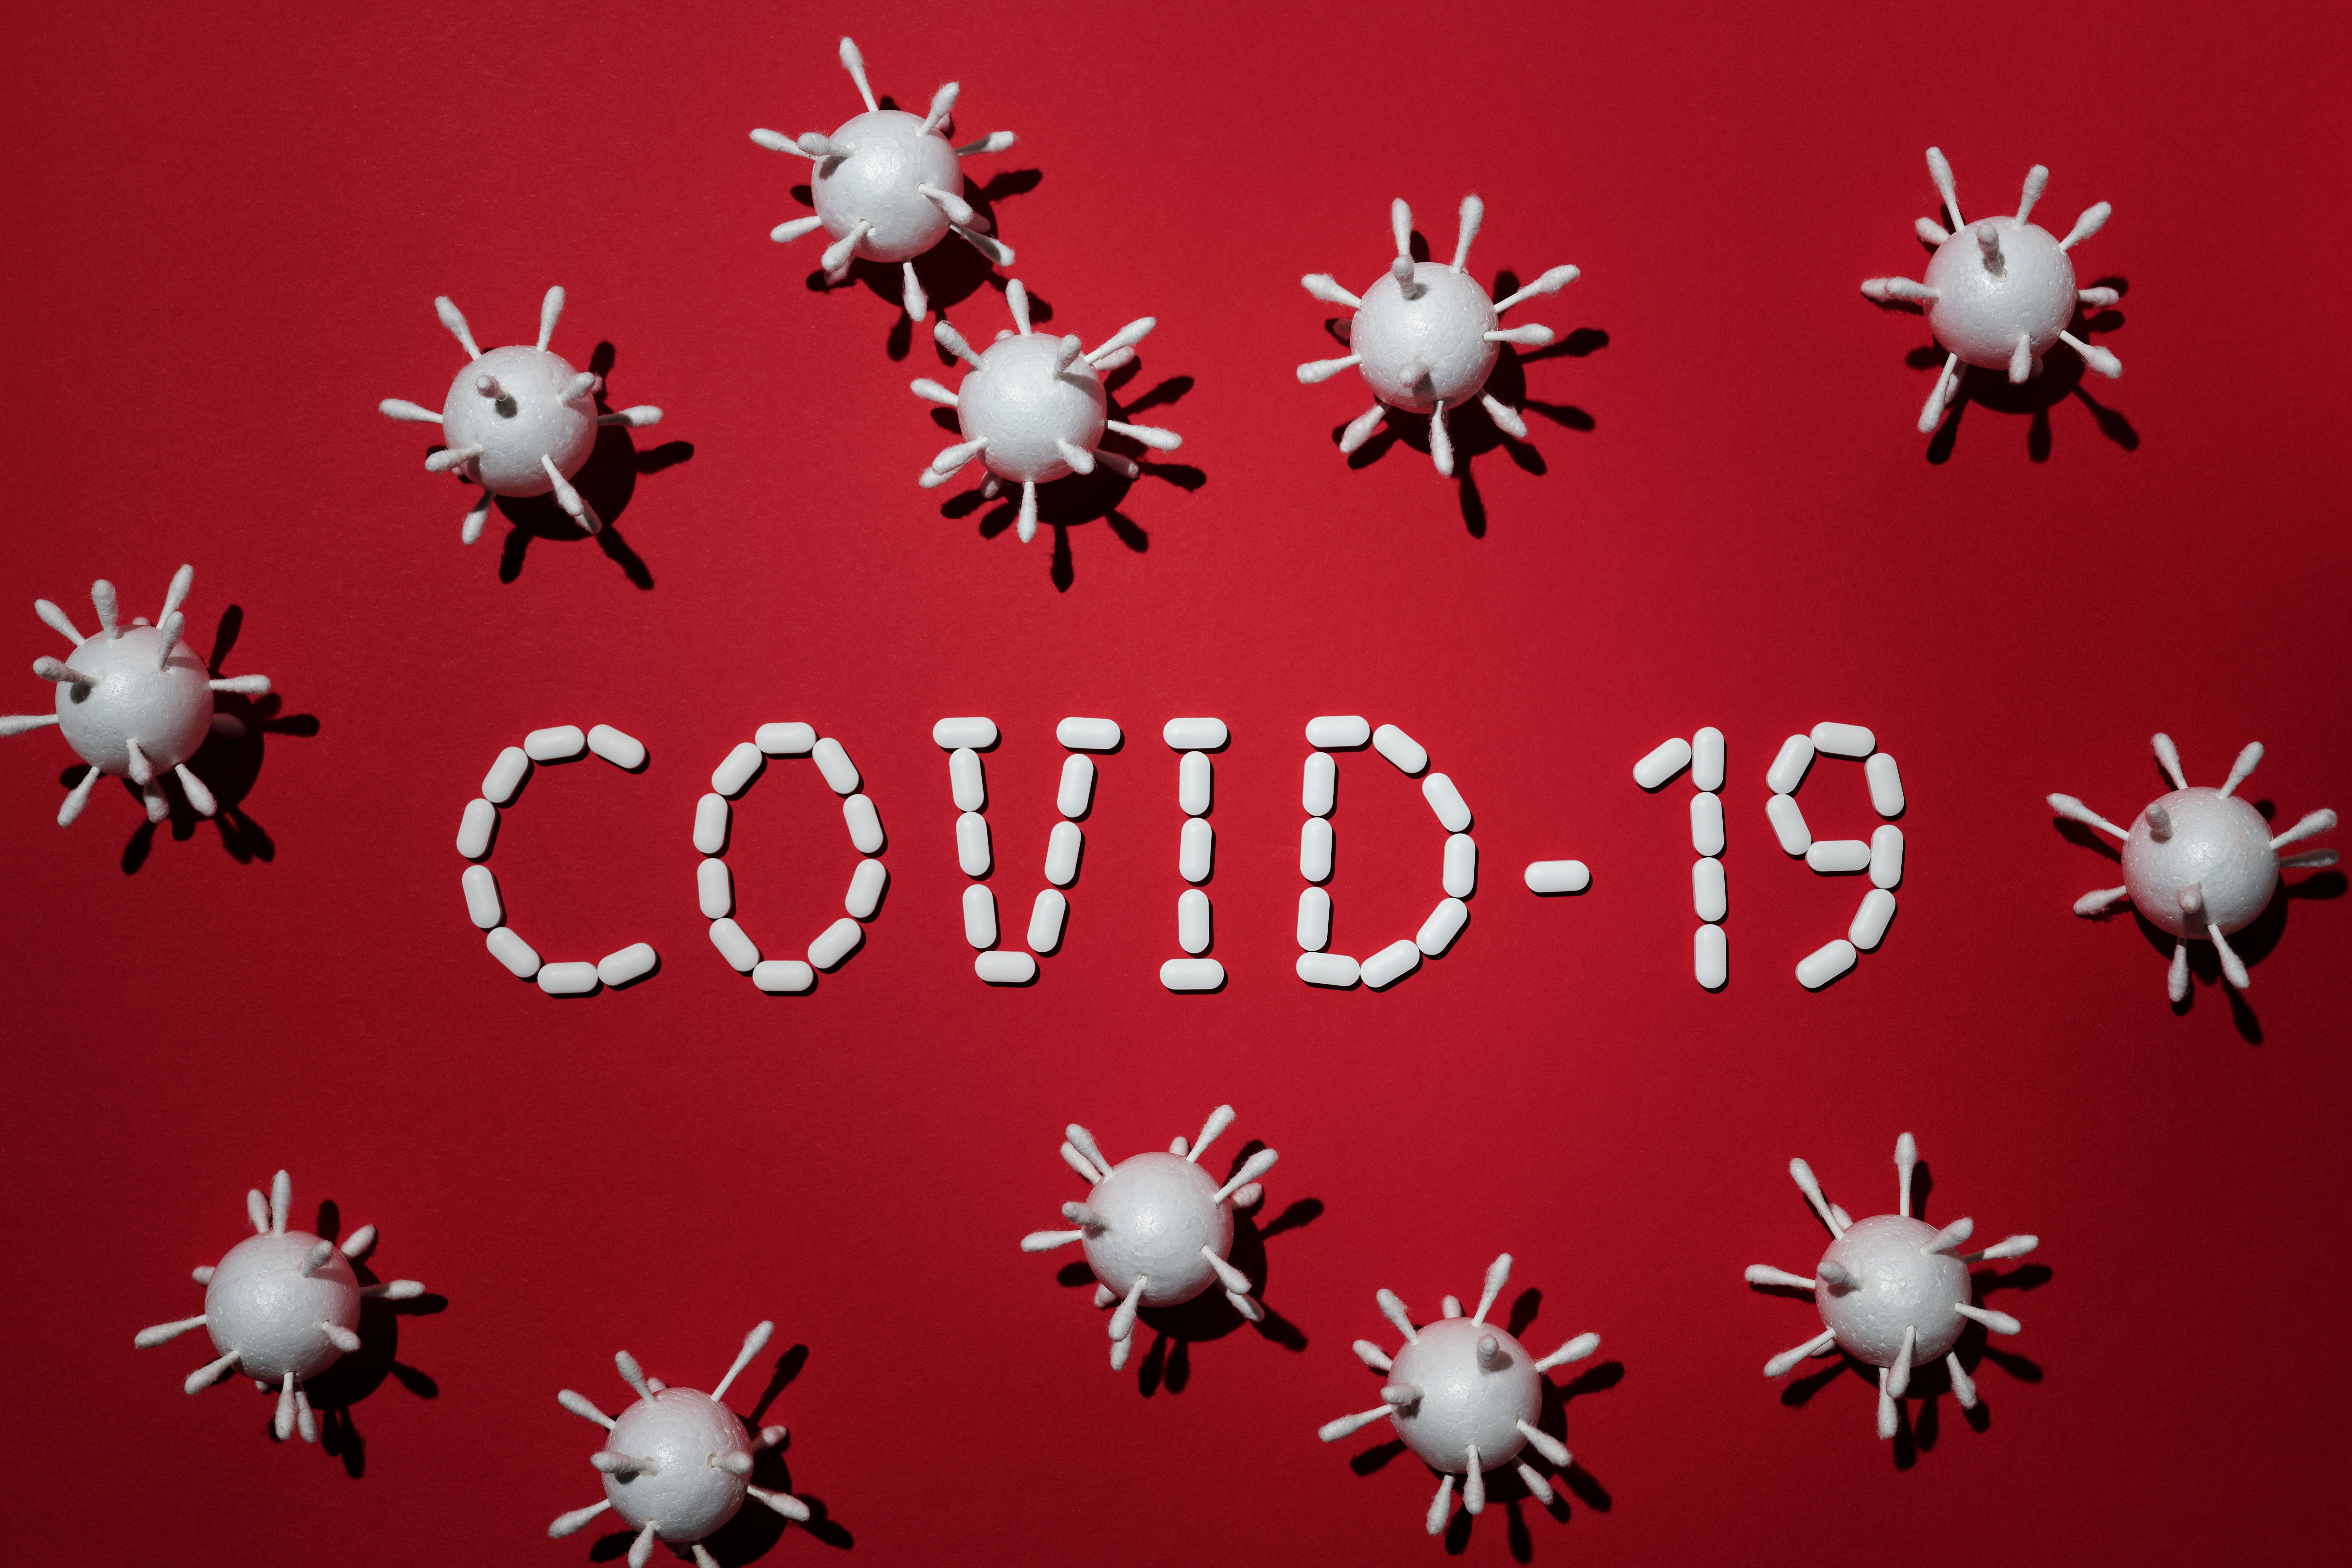 COVID-19 themed illustration. | Source: Pexels/Edward Jenner